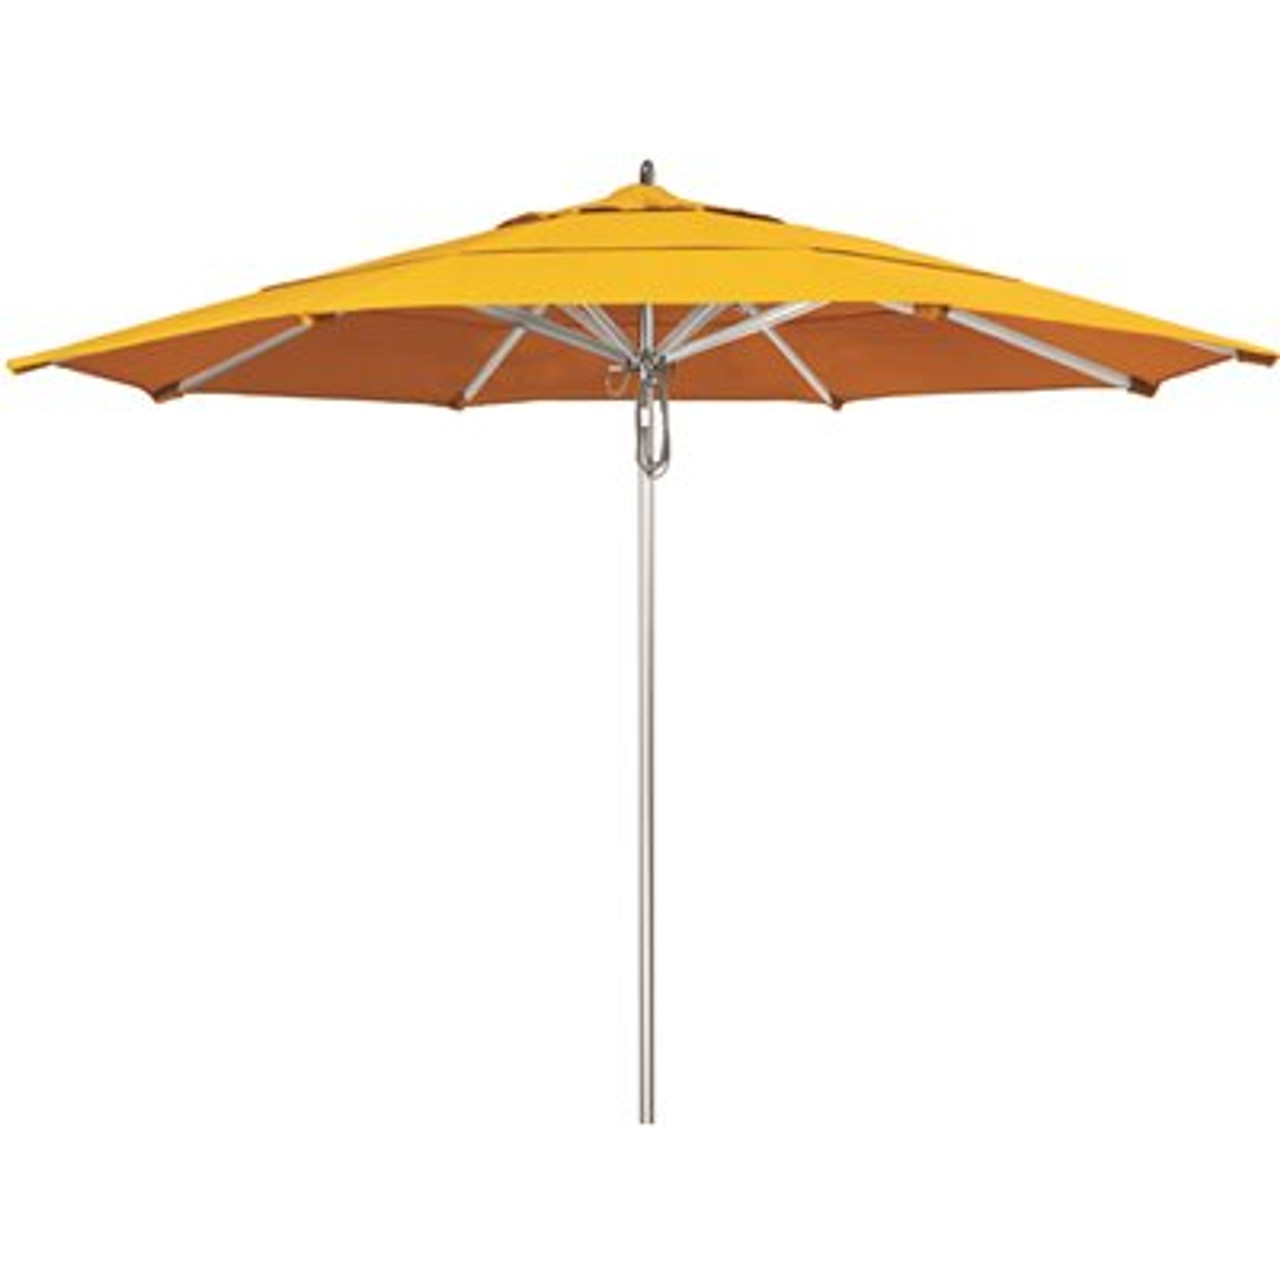 California Umbrella 11 ft. Silver Aluminum Commercial Market Patio Umbrella with Pulley Lift in Sunflower Yellow Sunbrella